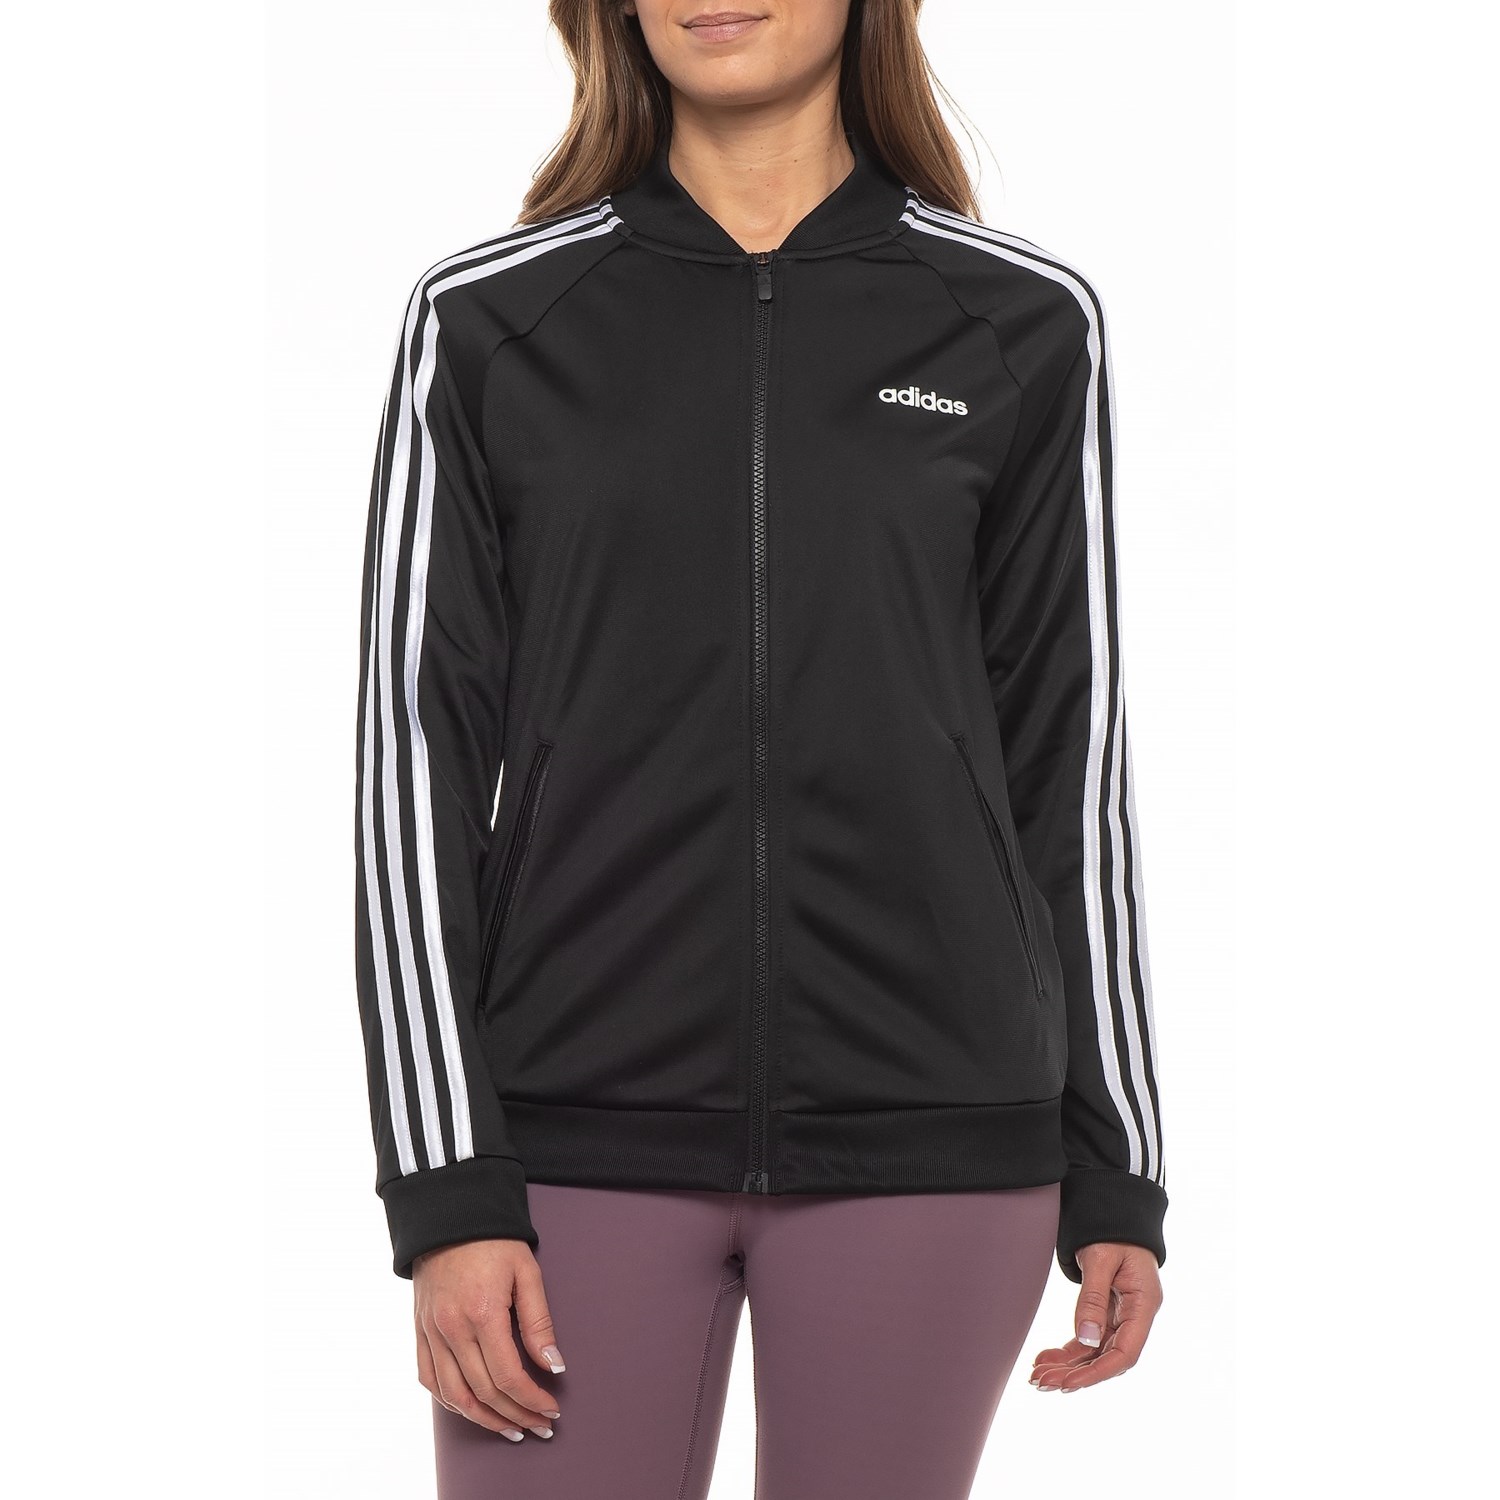 adidas black track jacket women's